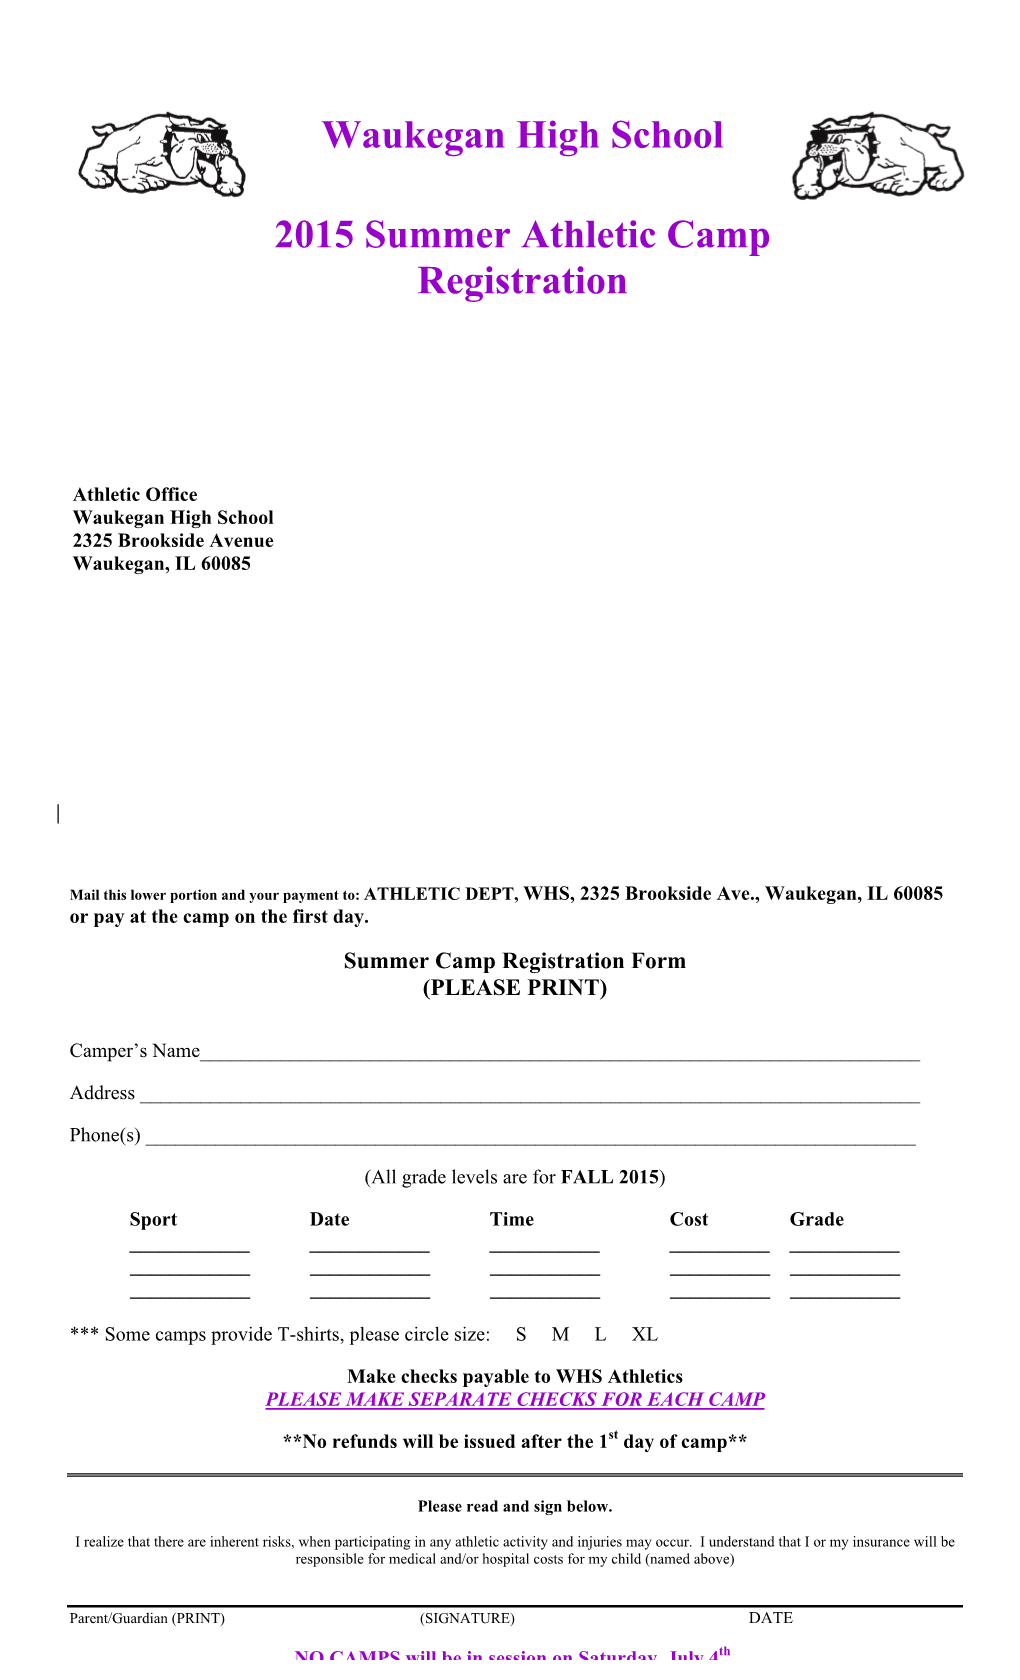 Waukegan High School 2015 Summer Athletic Camp Registration